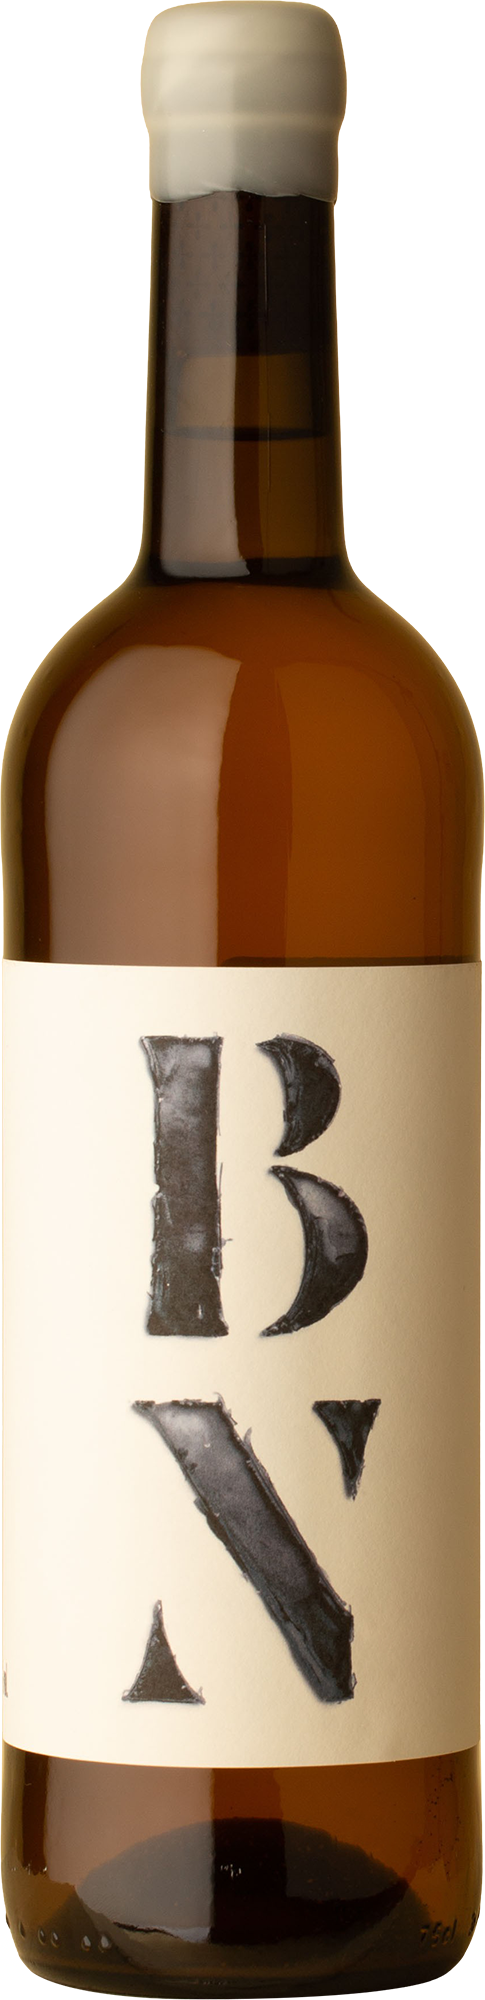 Partida Creus - BN Macabeu / Cartoixa Vermell 2020 Orange Wine